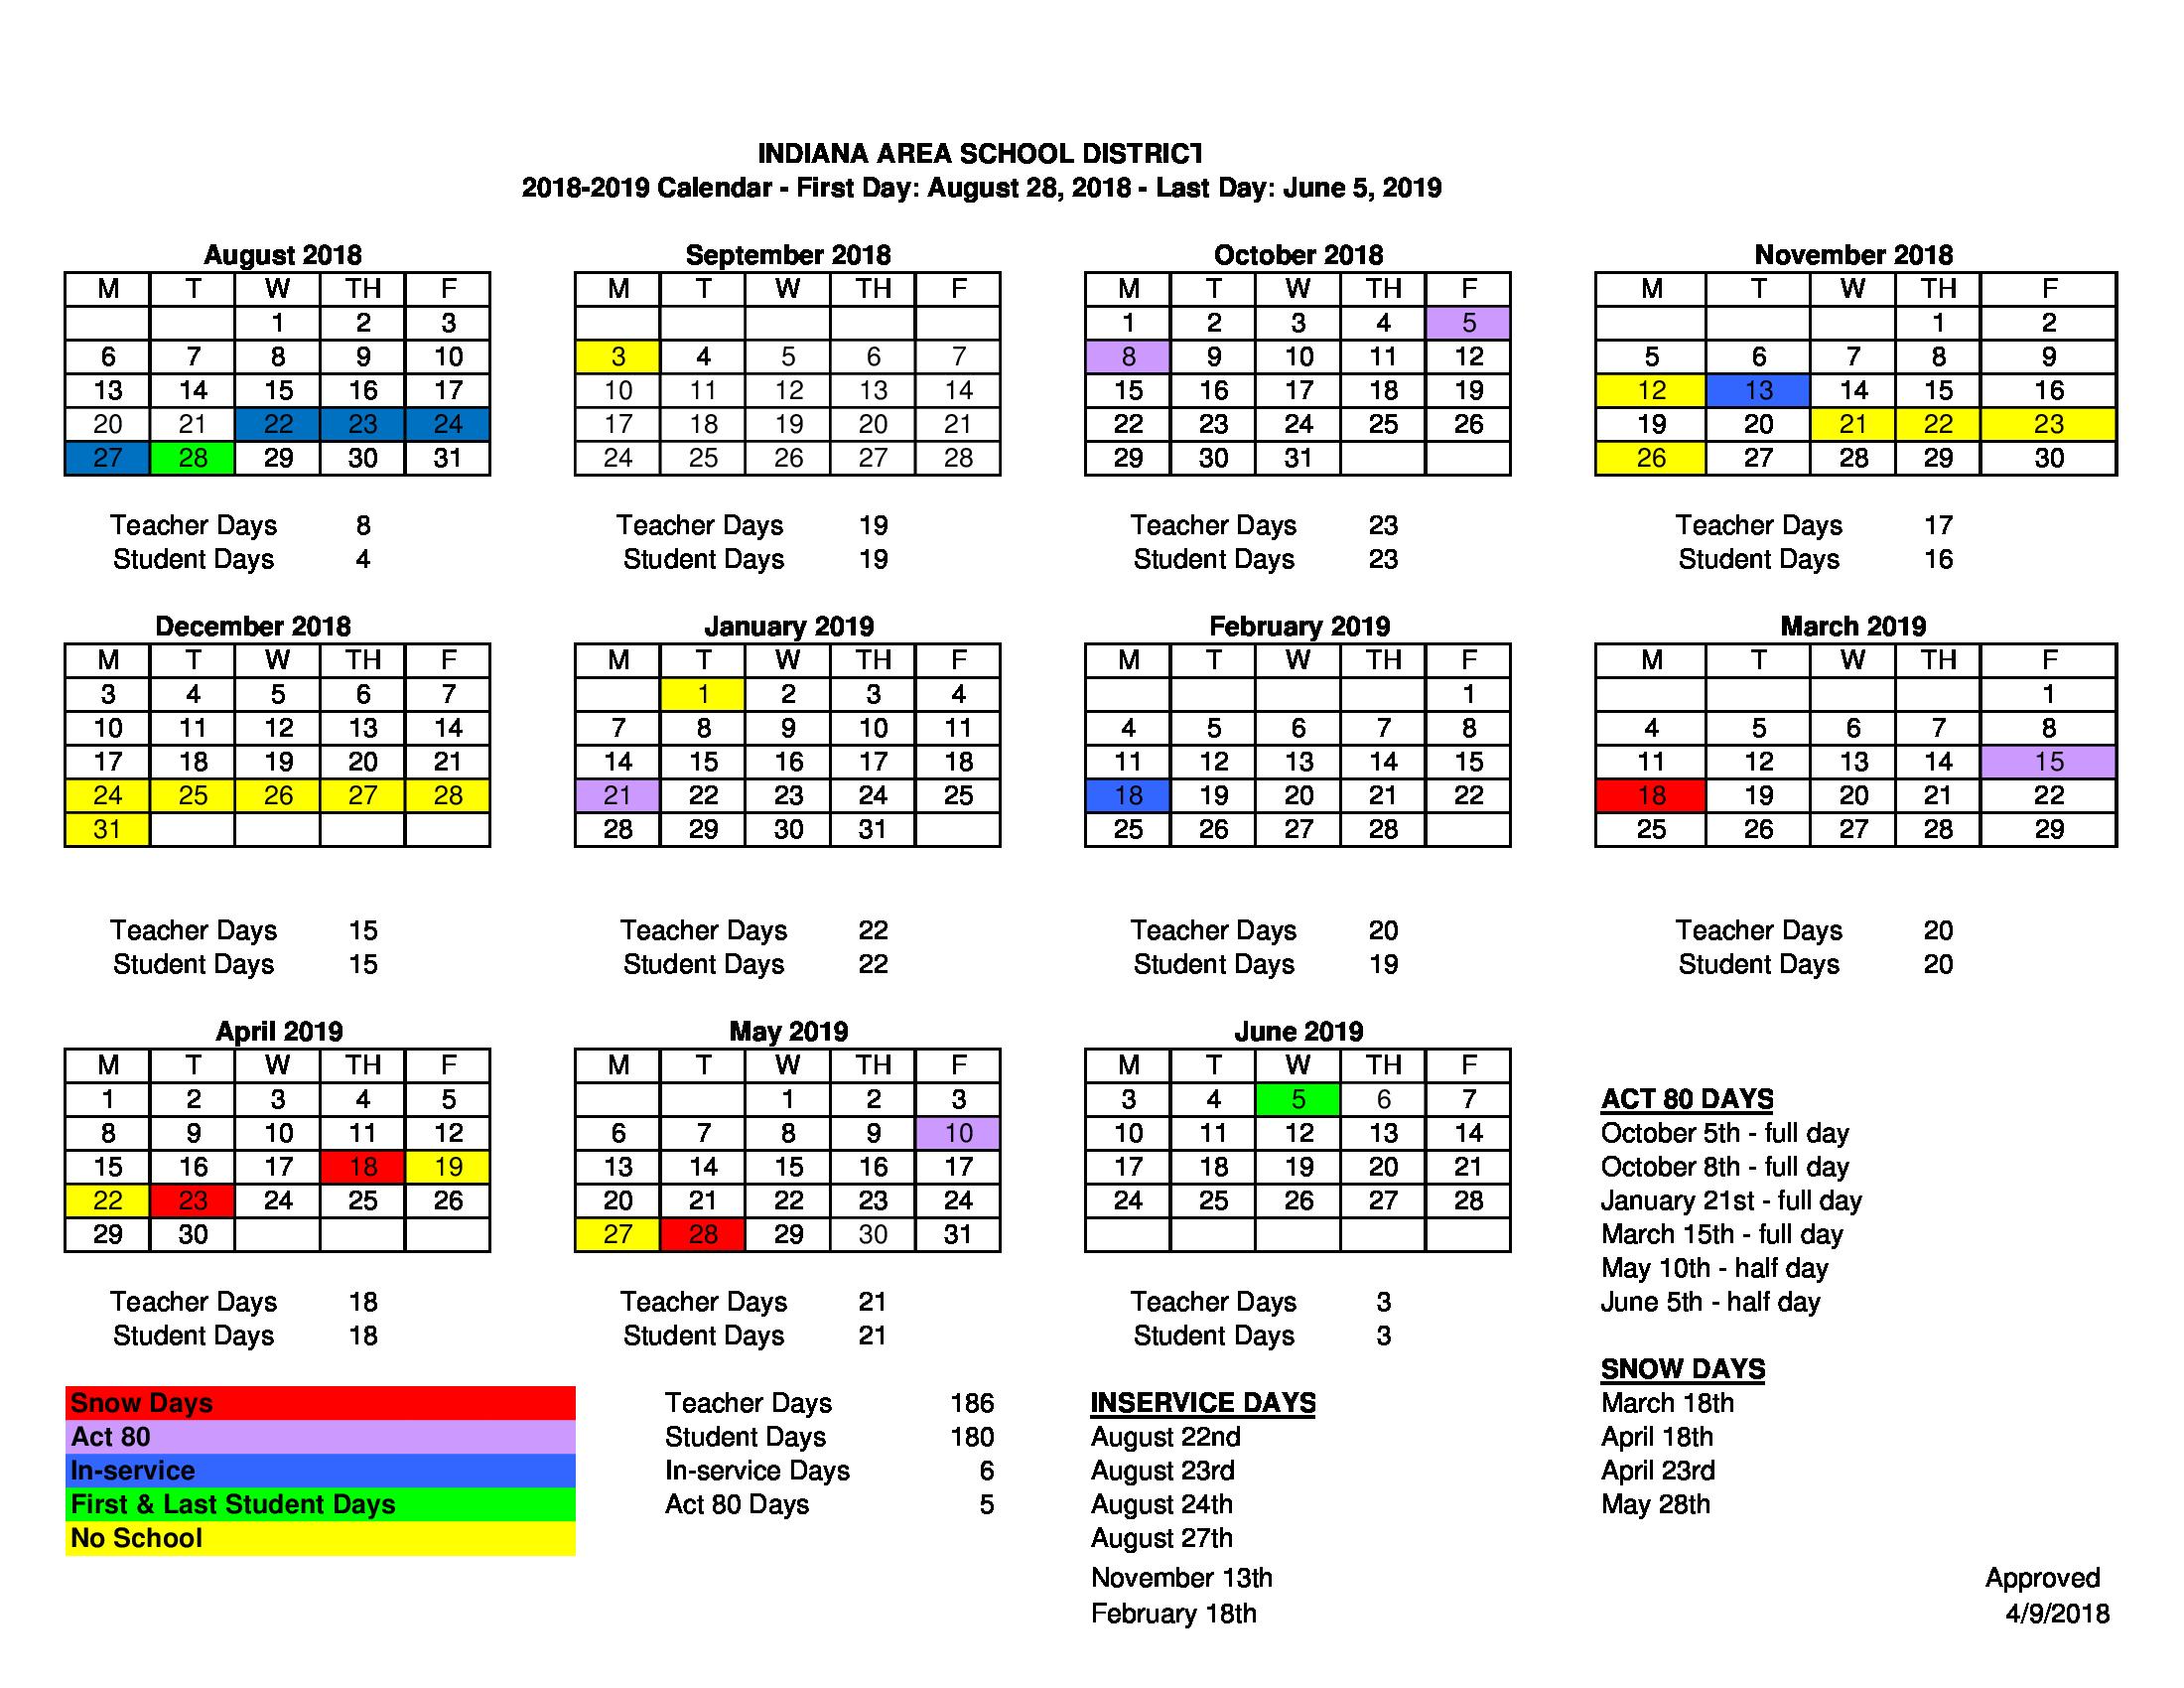 2018-19 IASD School Calendar